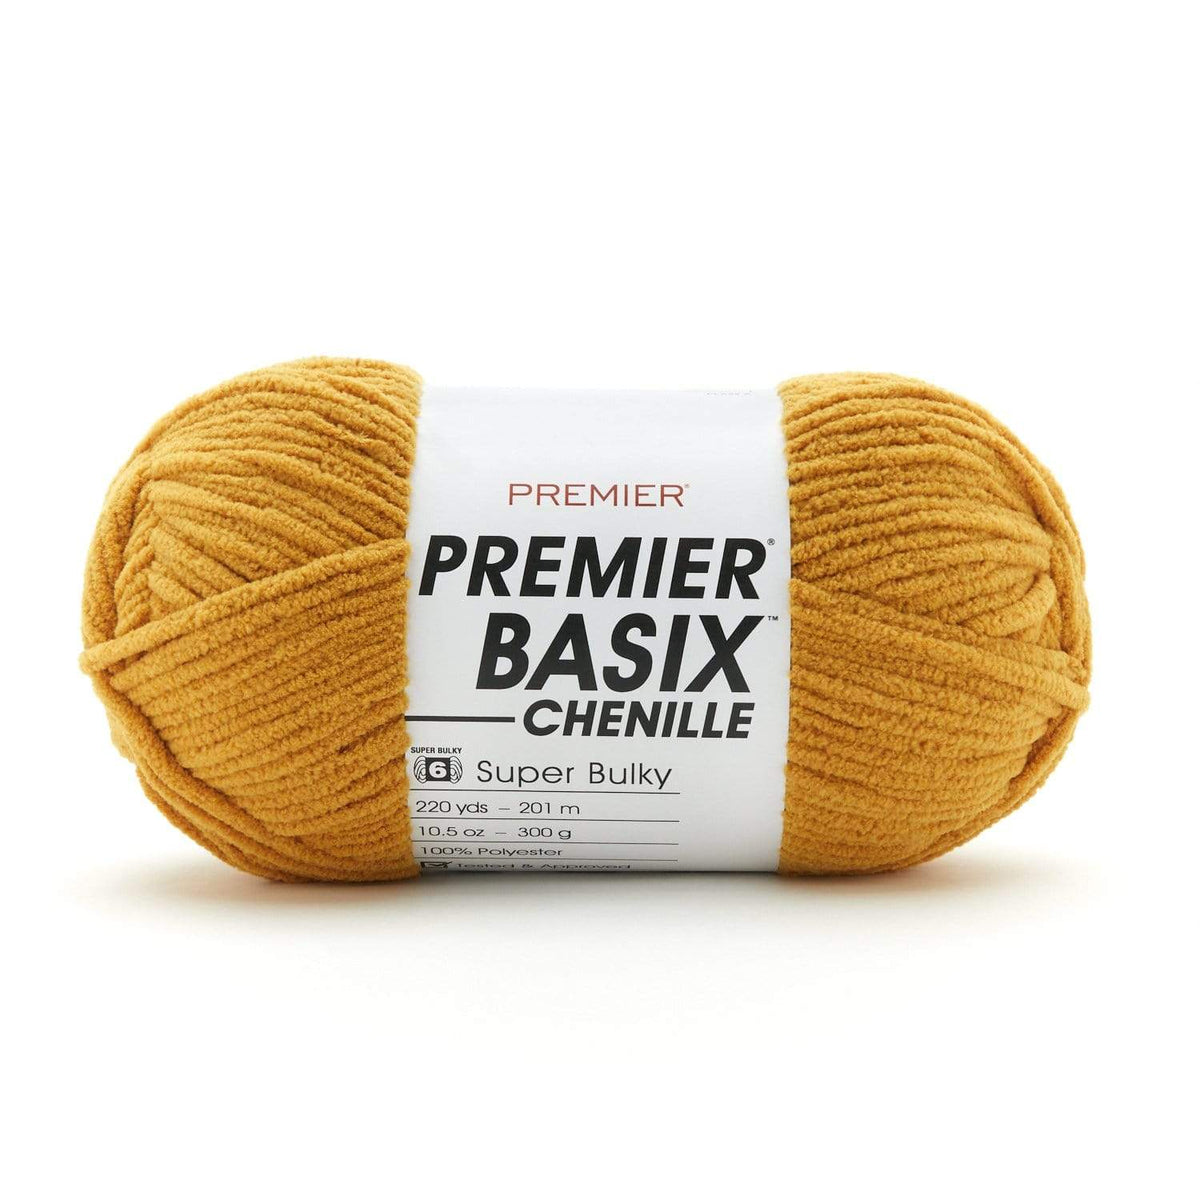 Just® Chenille Cone – Premier Yarns